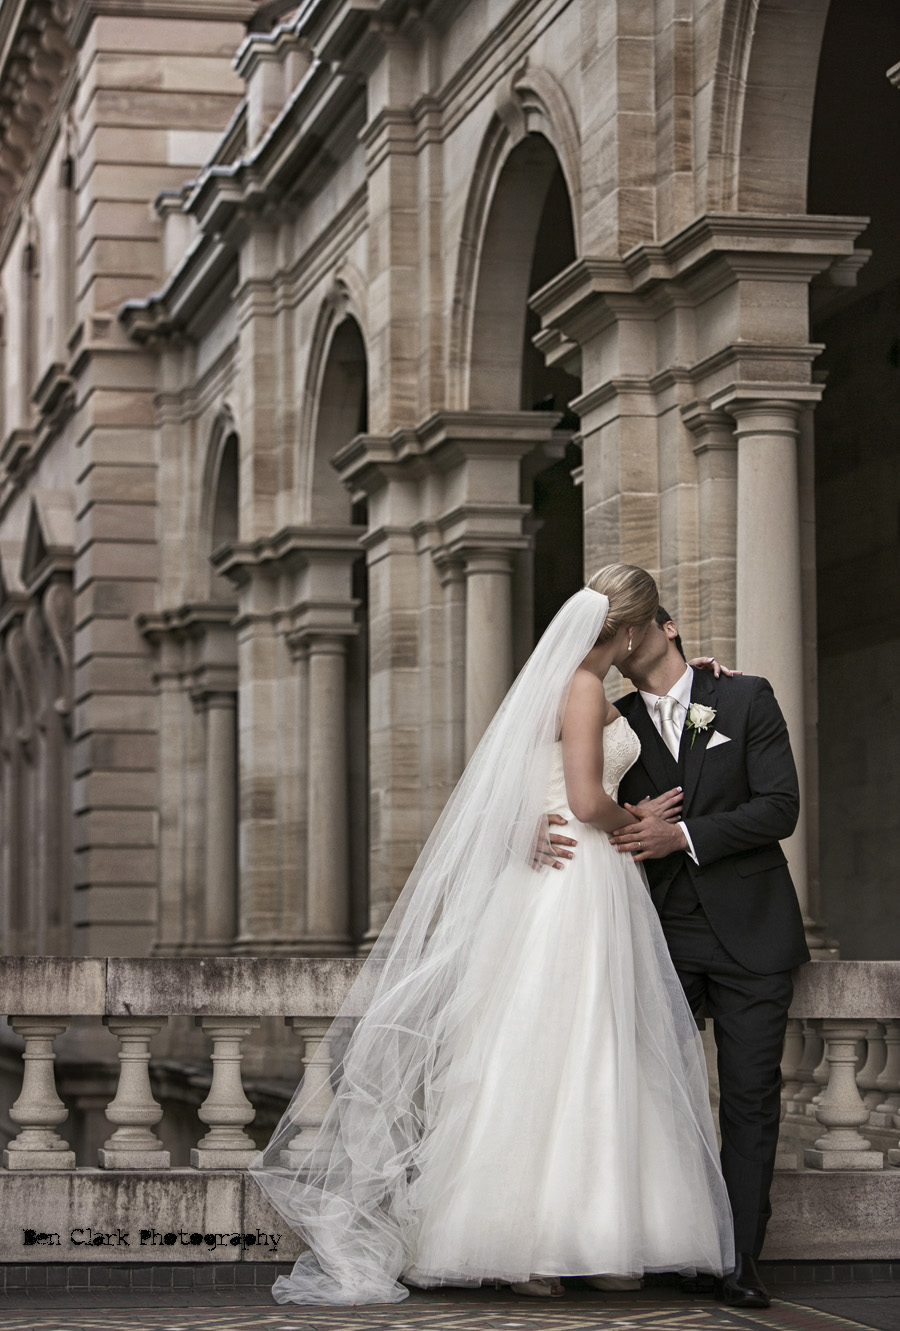 Brisbane Wedding Photography (1)